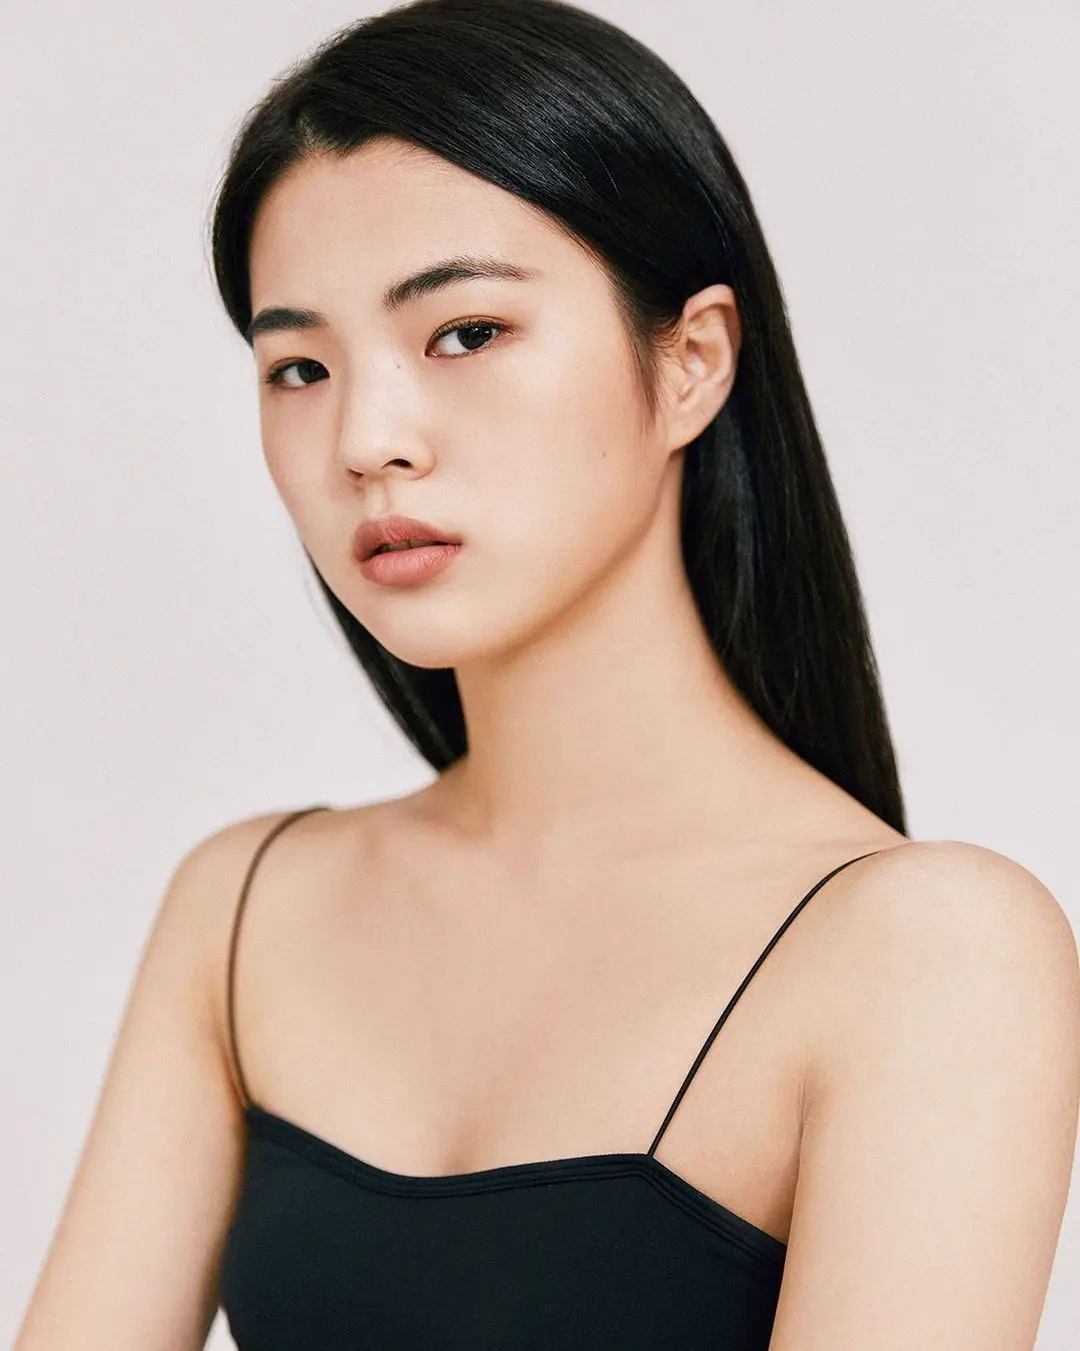 Korean woman image